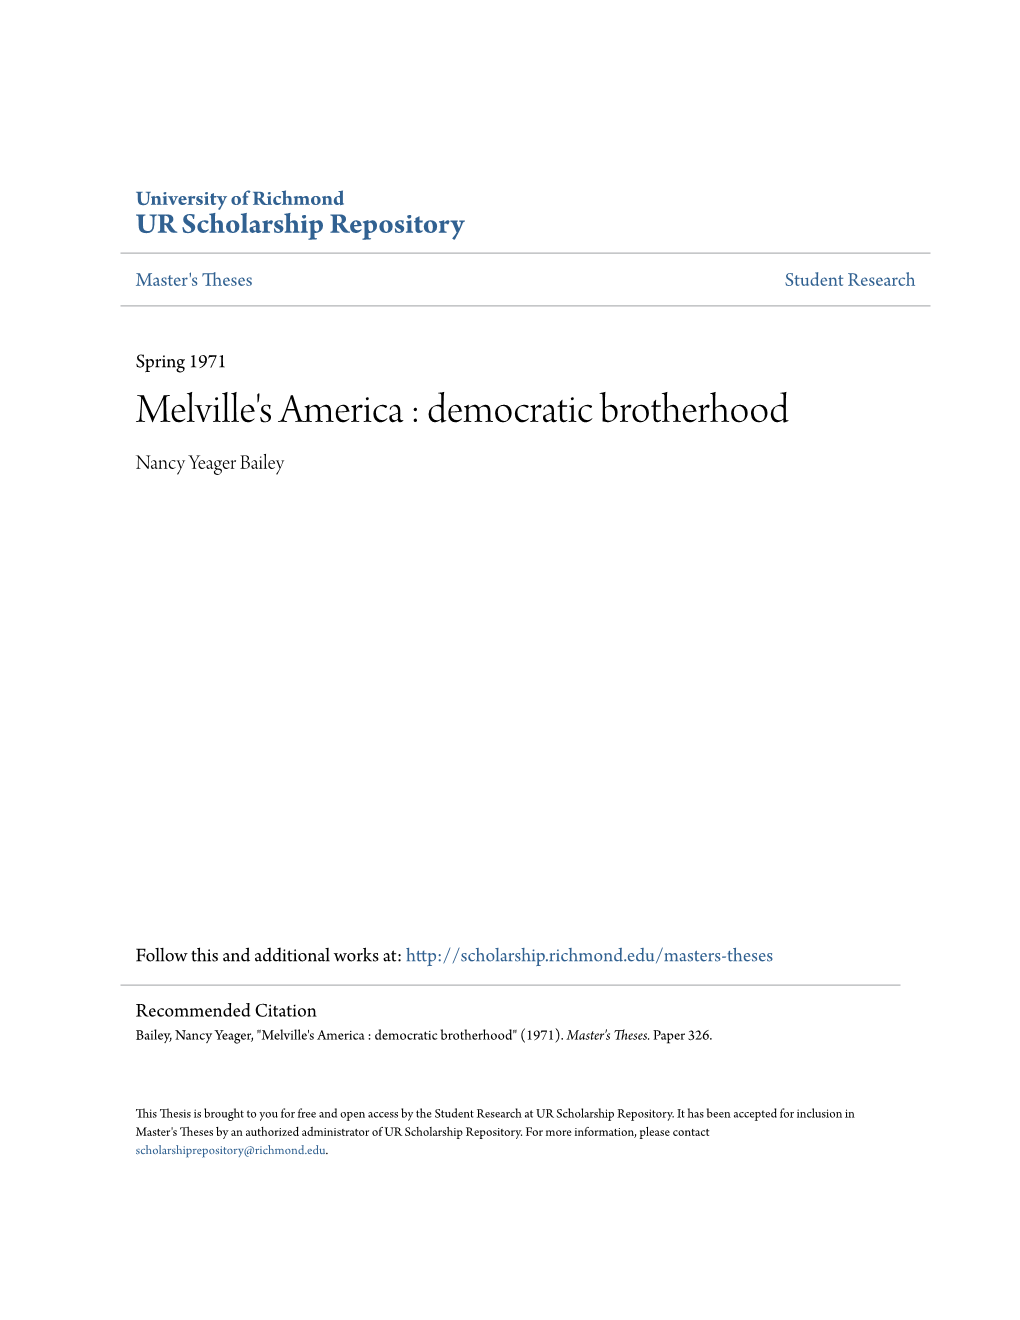 Melville's America : Democratic Brotherhood Nancy Yeager Bailey